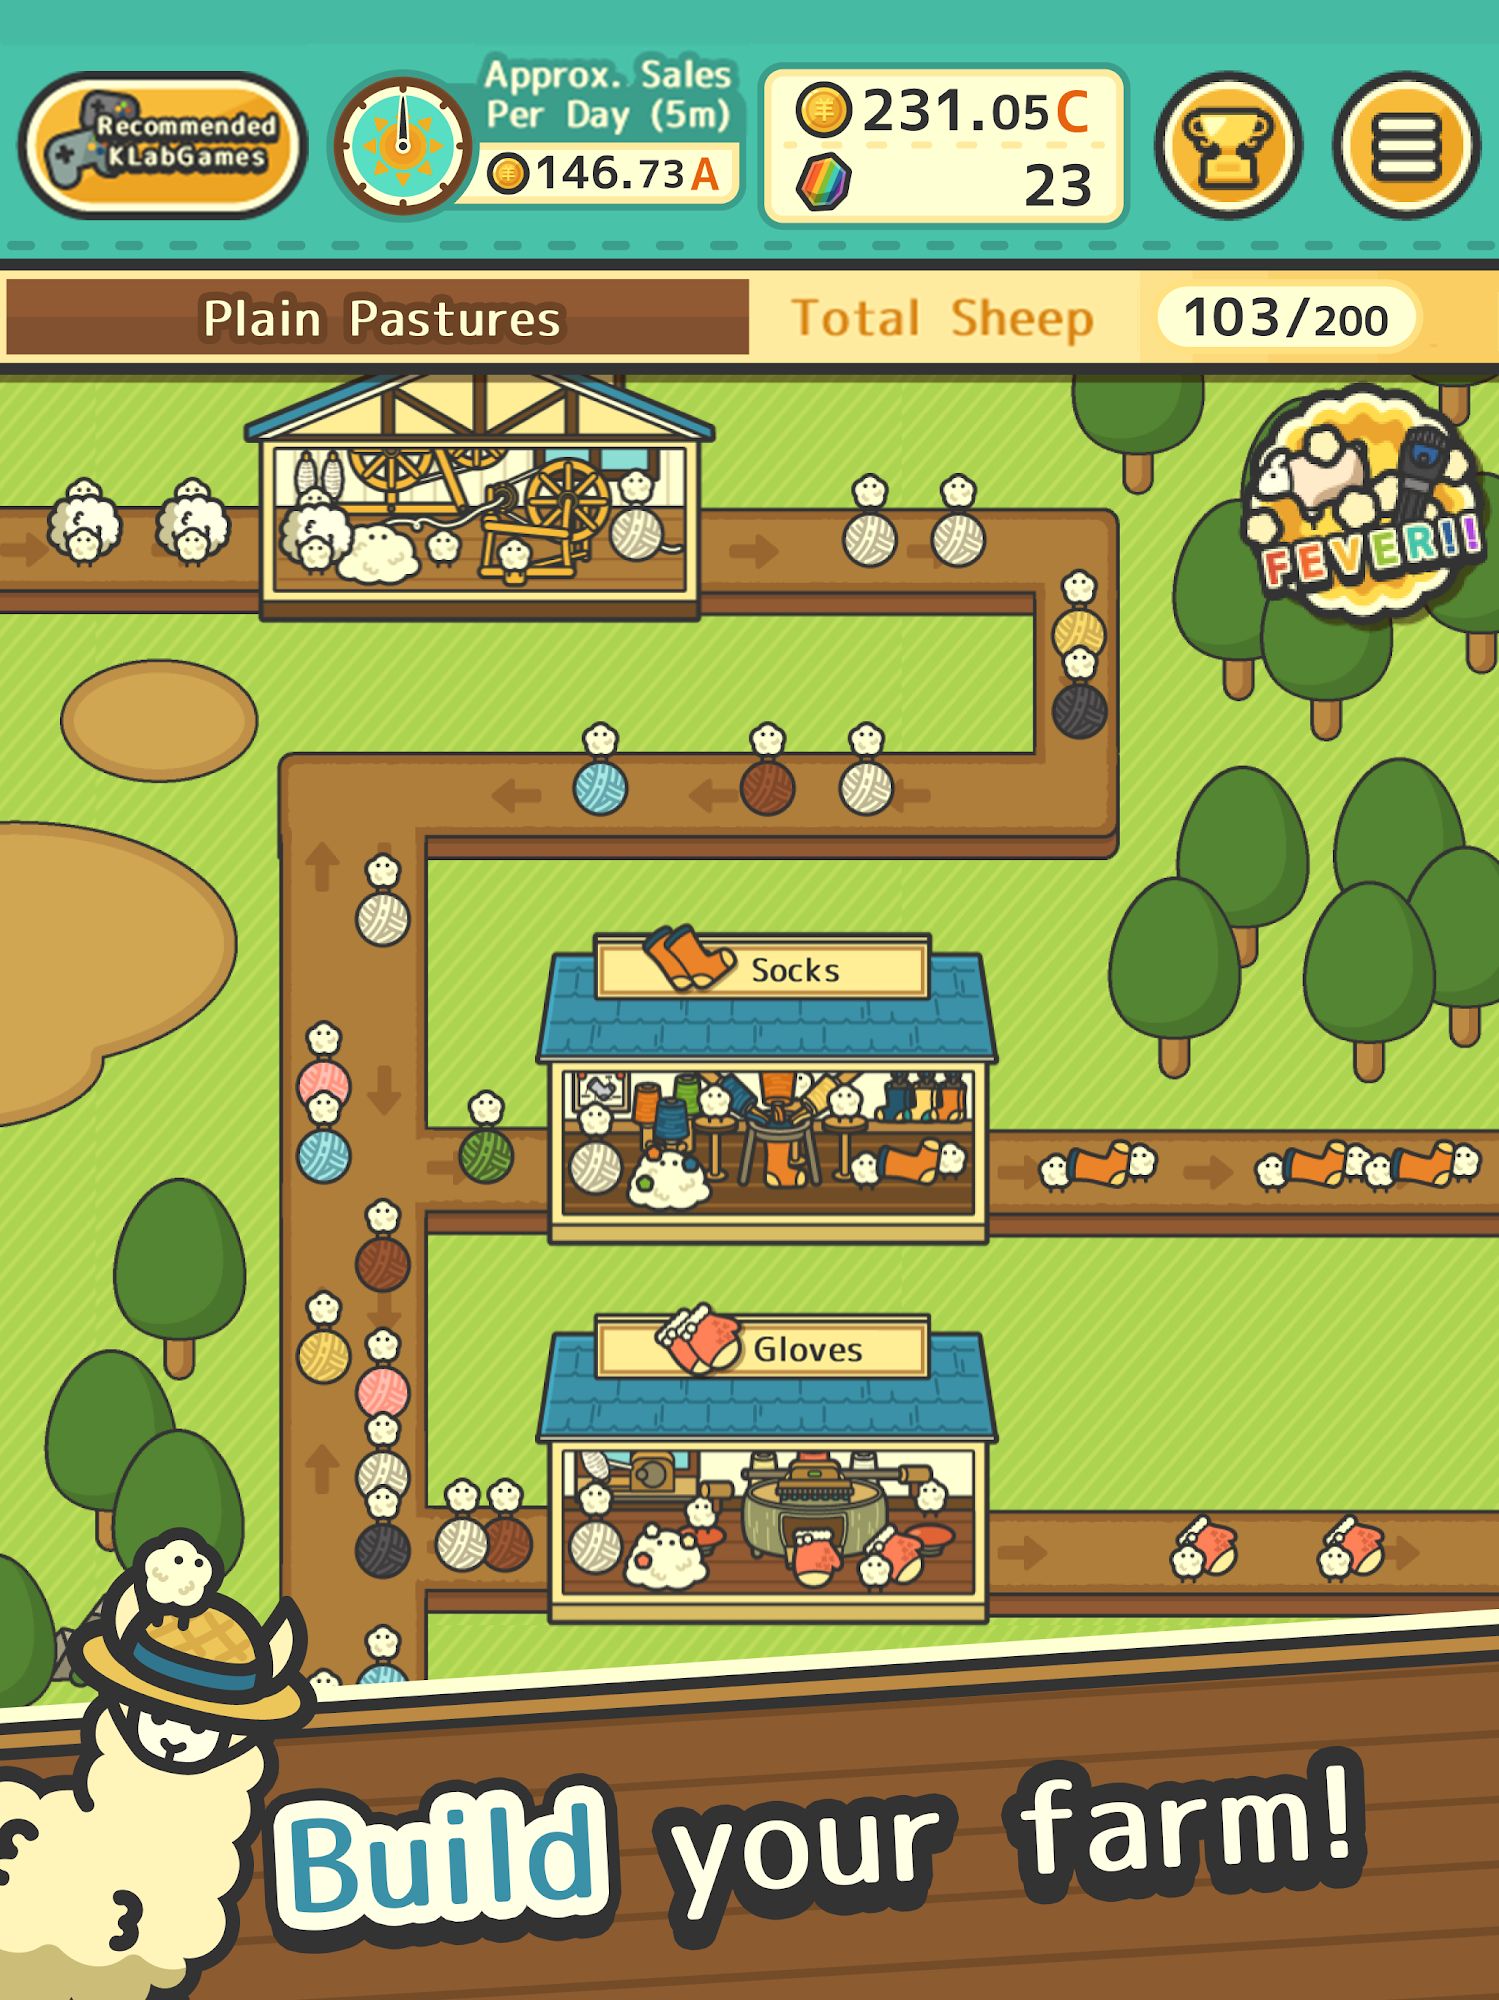 Fluffy Sheep Farm - Android game screenshots.